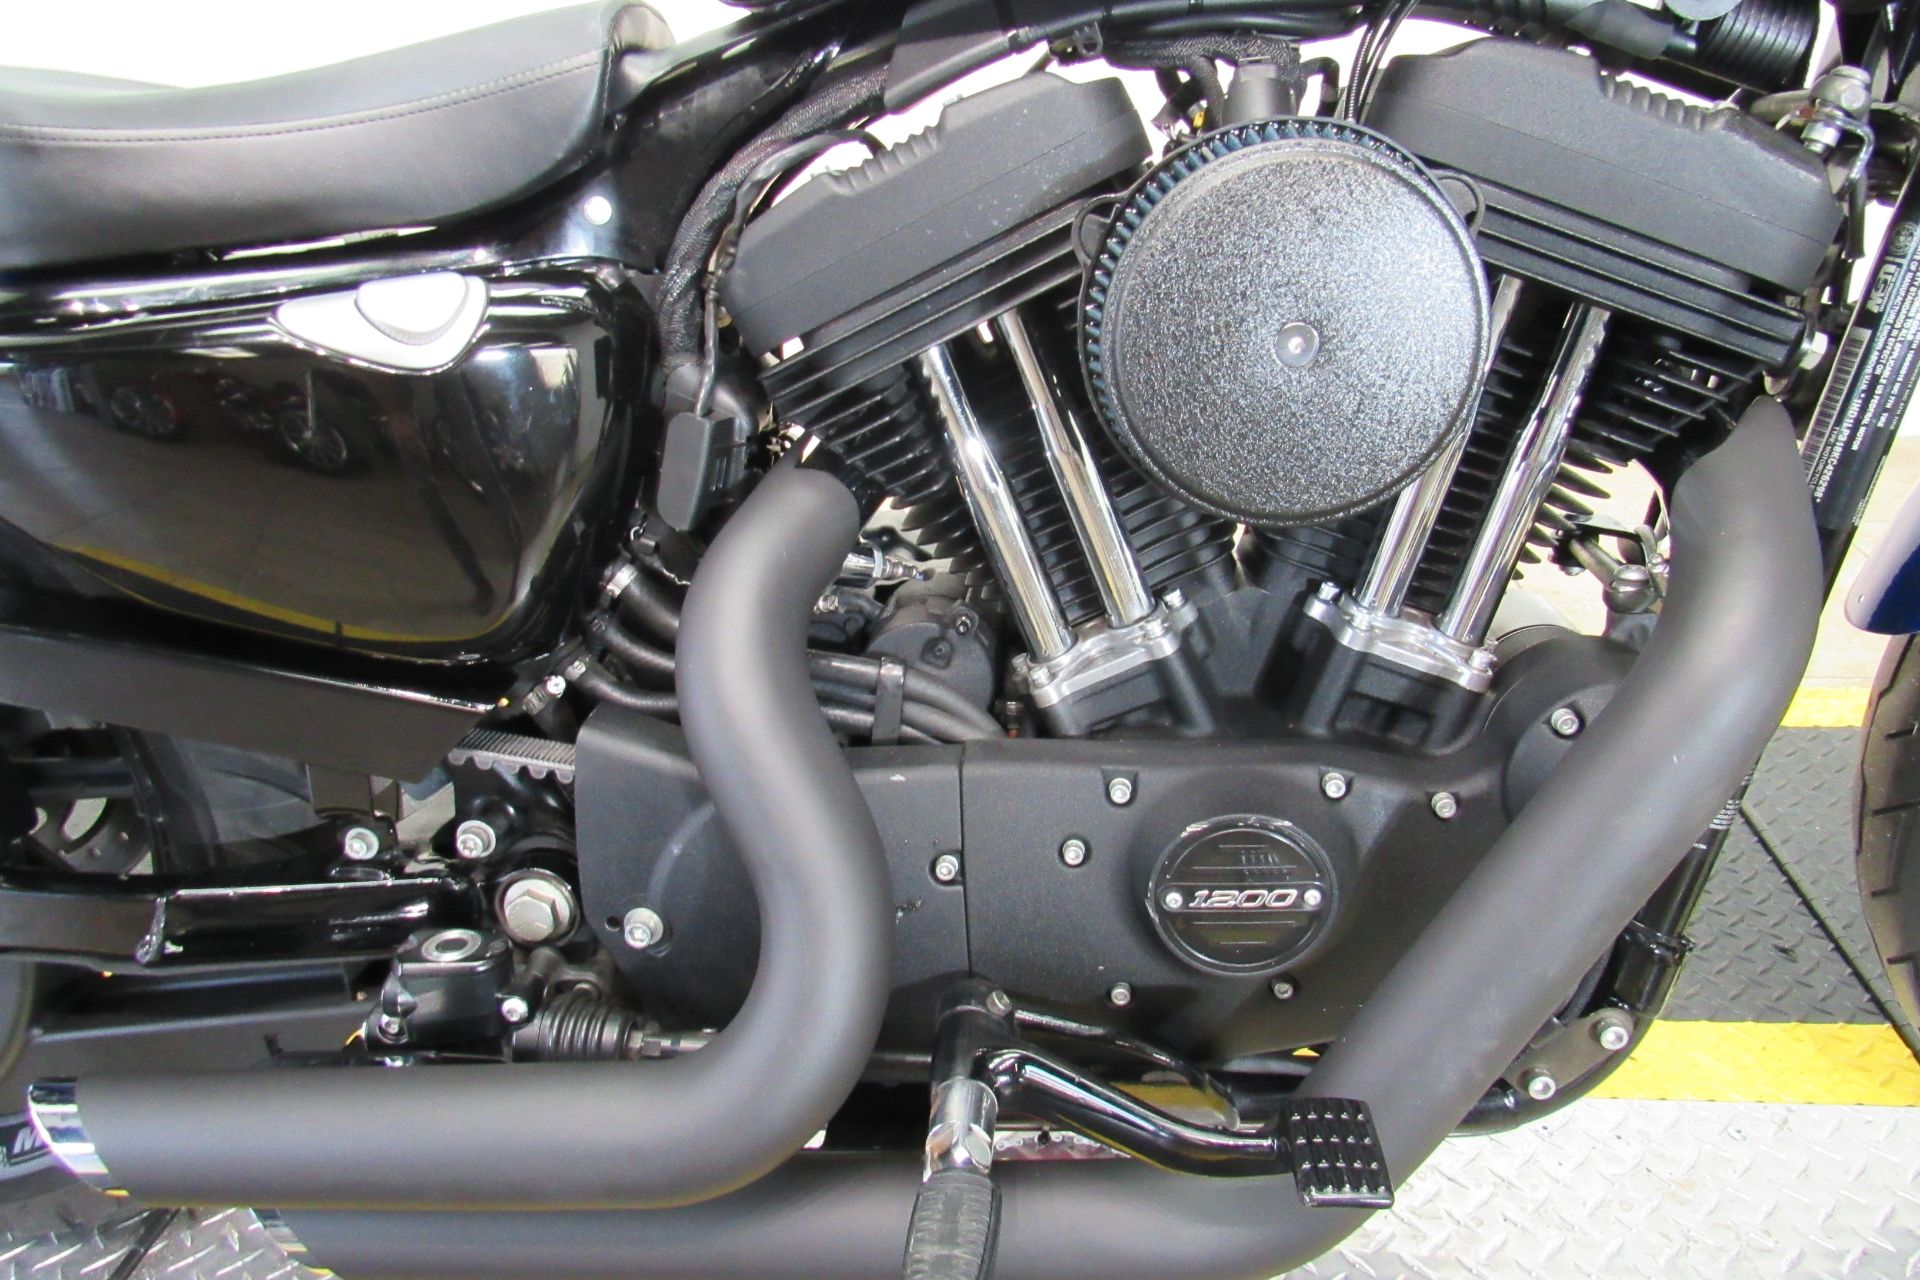 2019 Harley-Davidson Iron 1200™ in Temecula, California - Photo 5